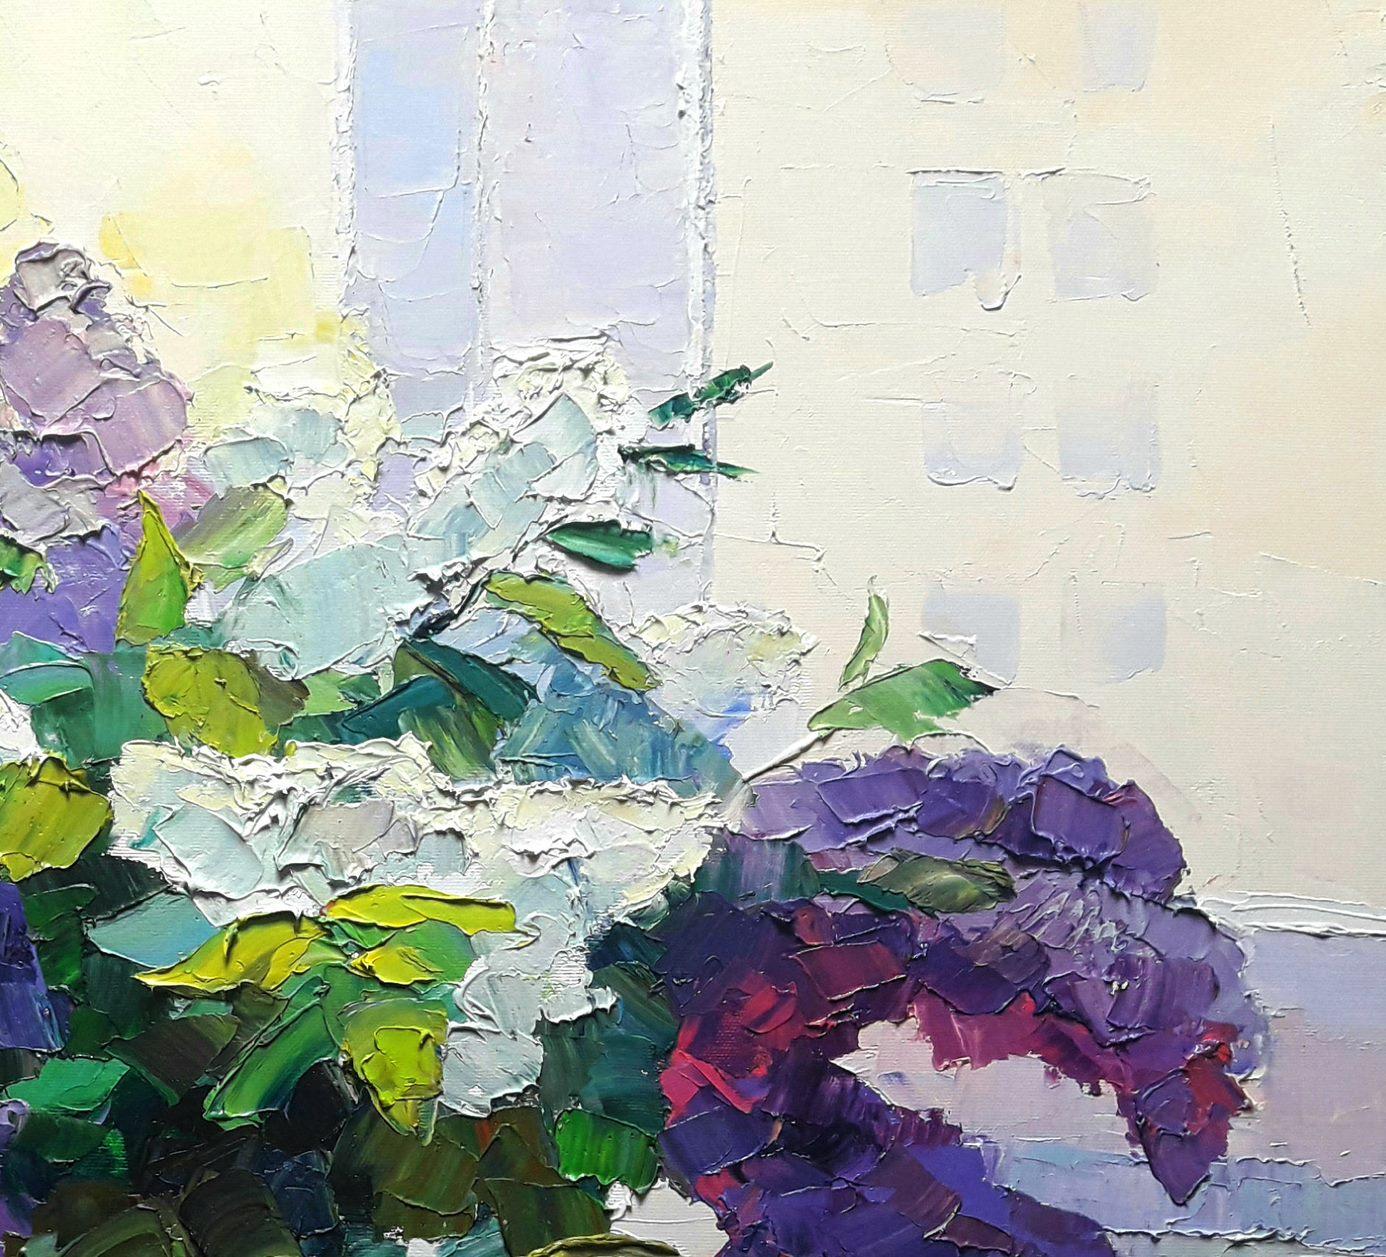 Artist: Boris Serdyuk 
Work: Original oil painting, handmade artwork, one of a kind 
Medium: Oil on Canvas
Style: Impressionism
Year: 2023
Title: Lilac on the window background
Size: 27.5